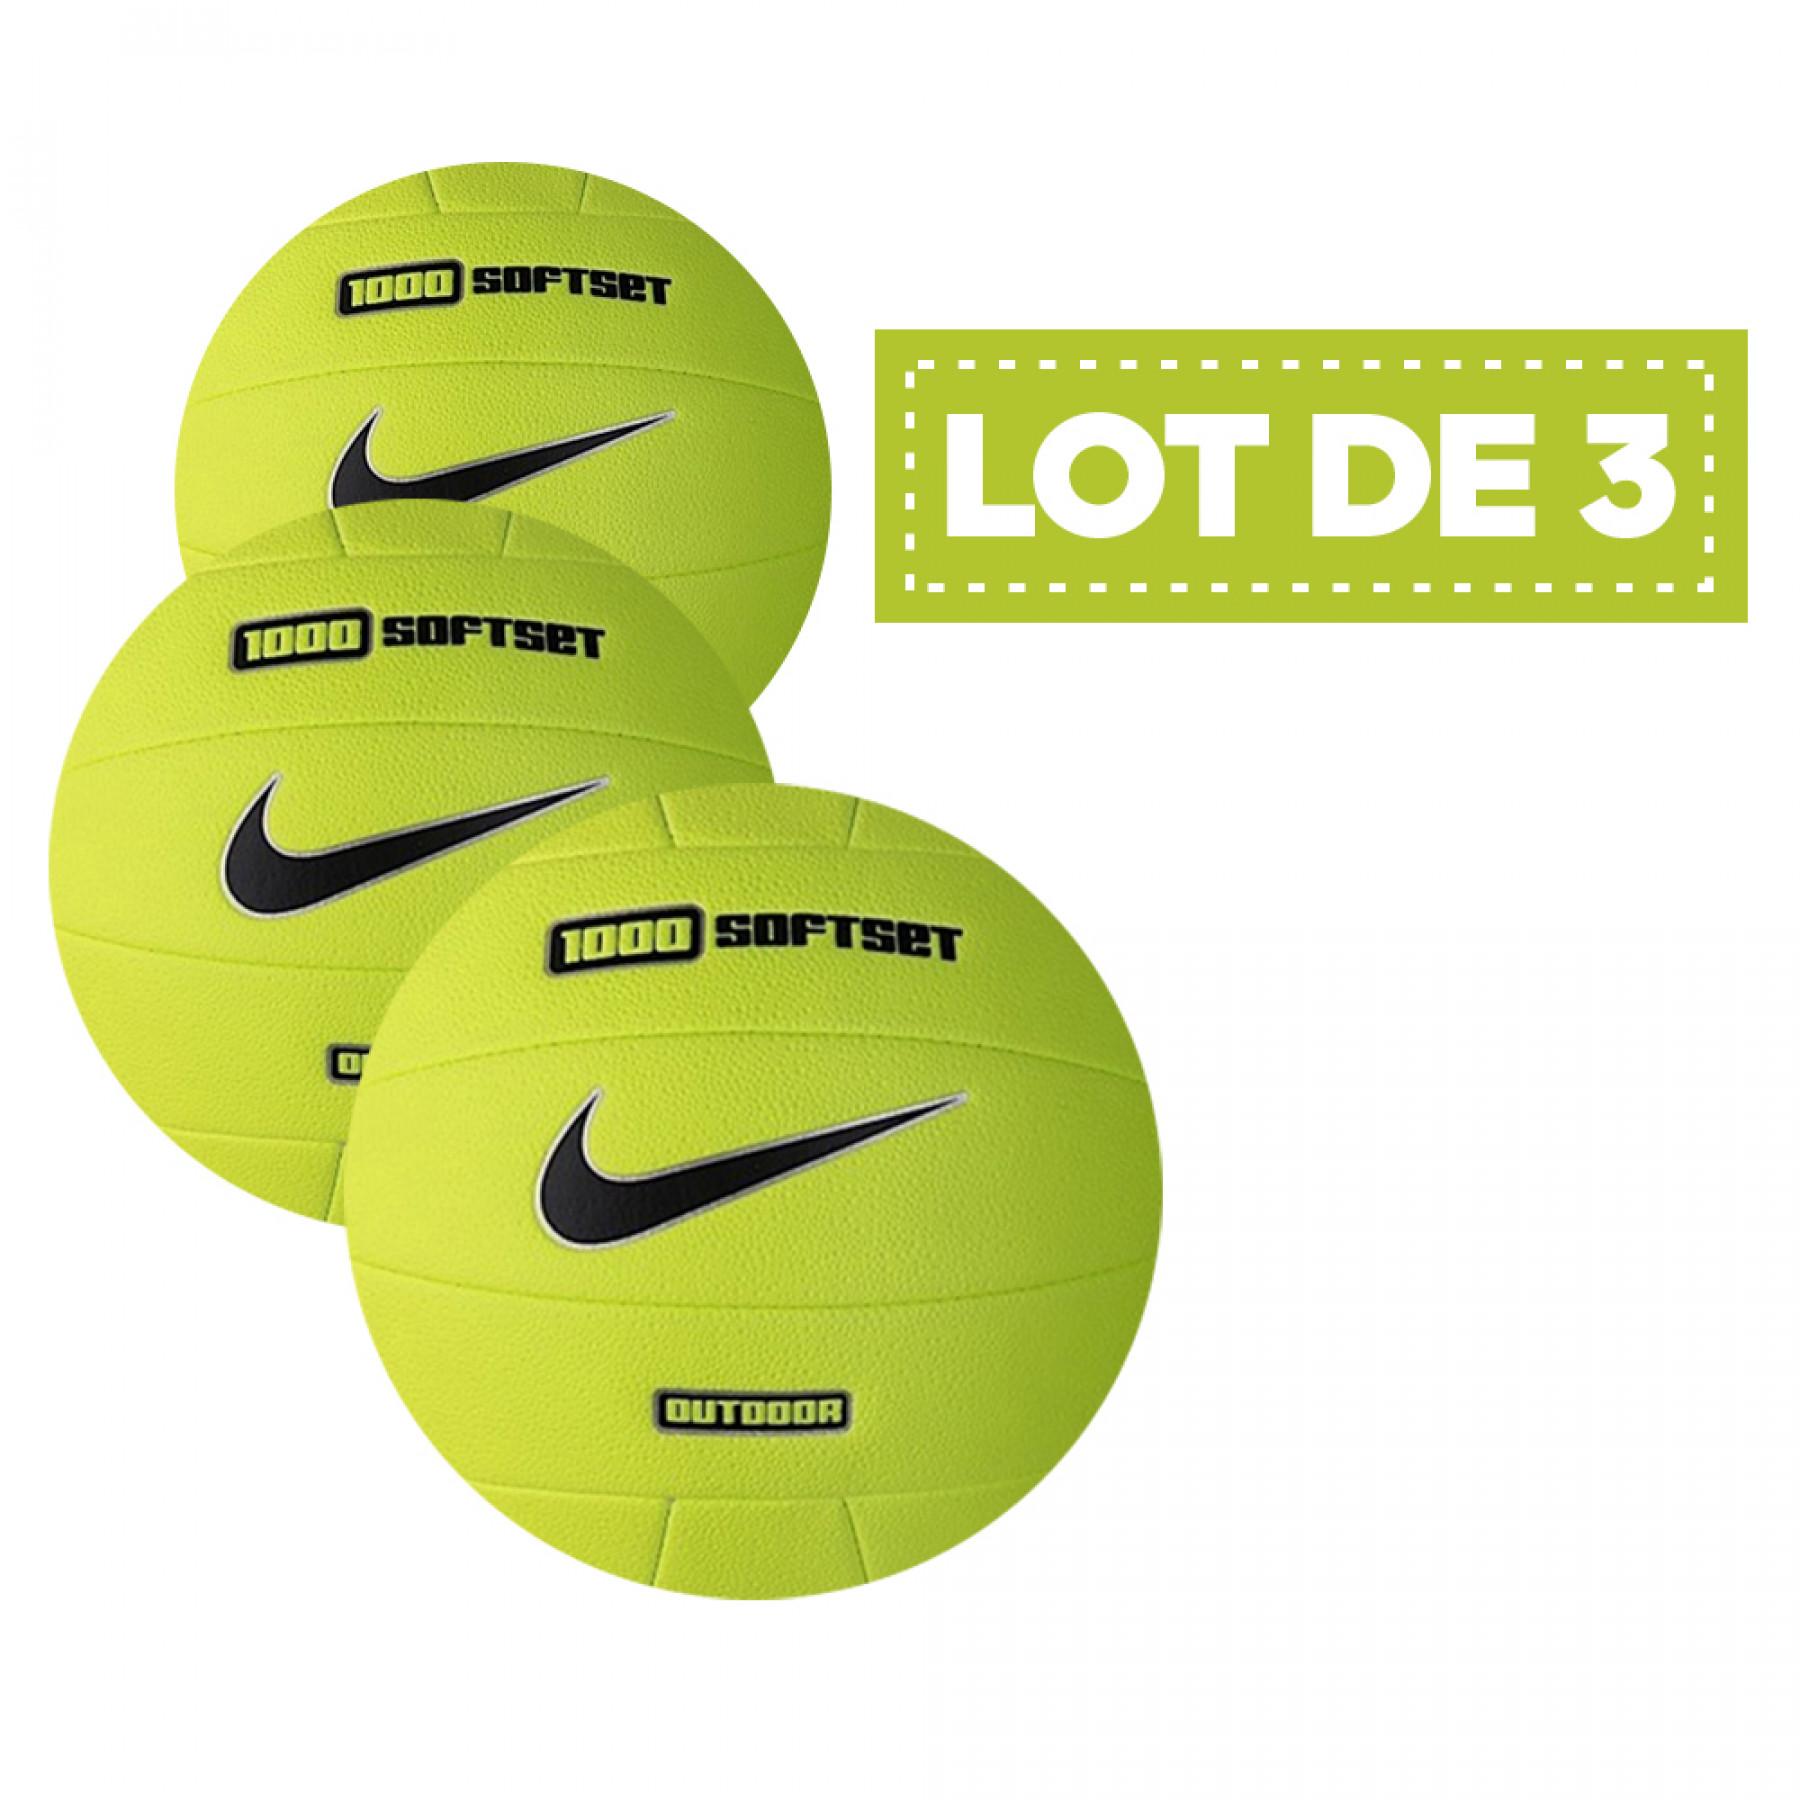 Set van 3 ballonnen Nike 1000 softset outdoor jaune fluo